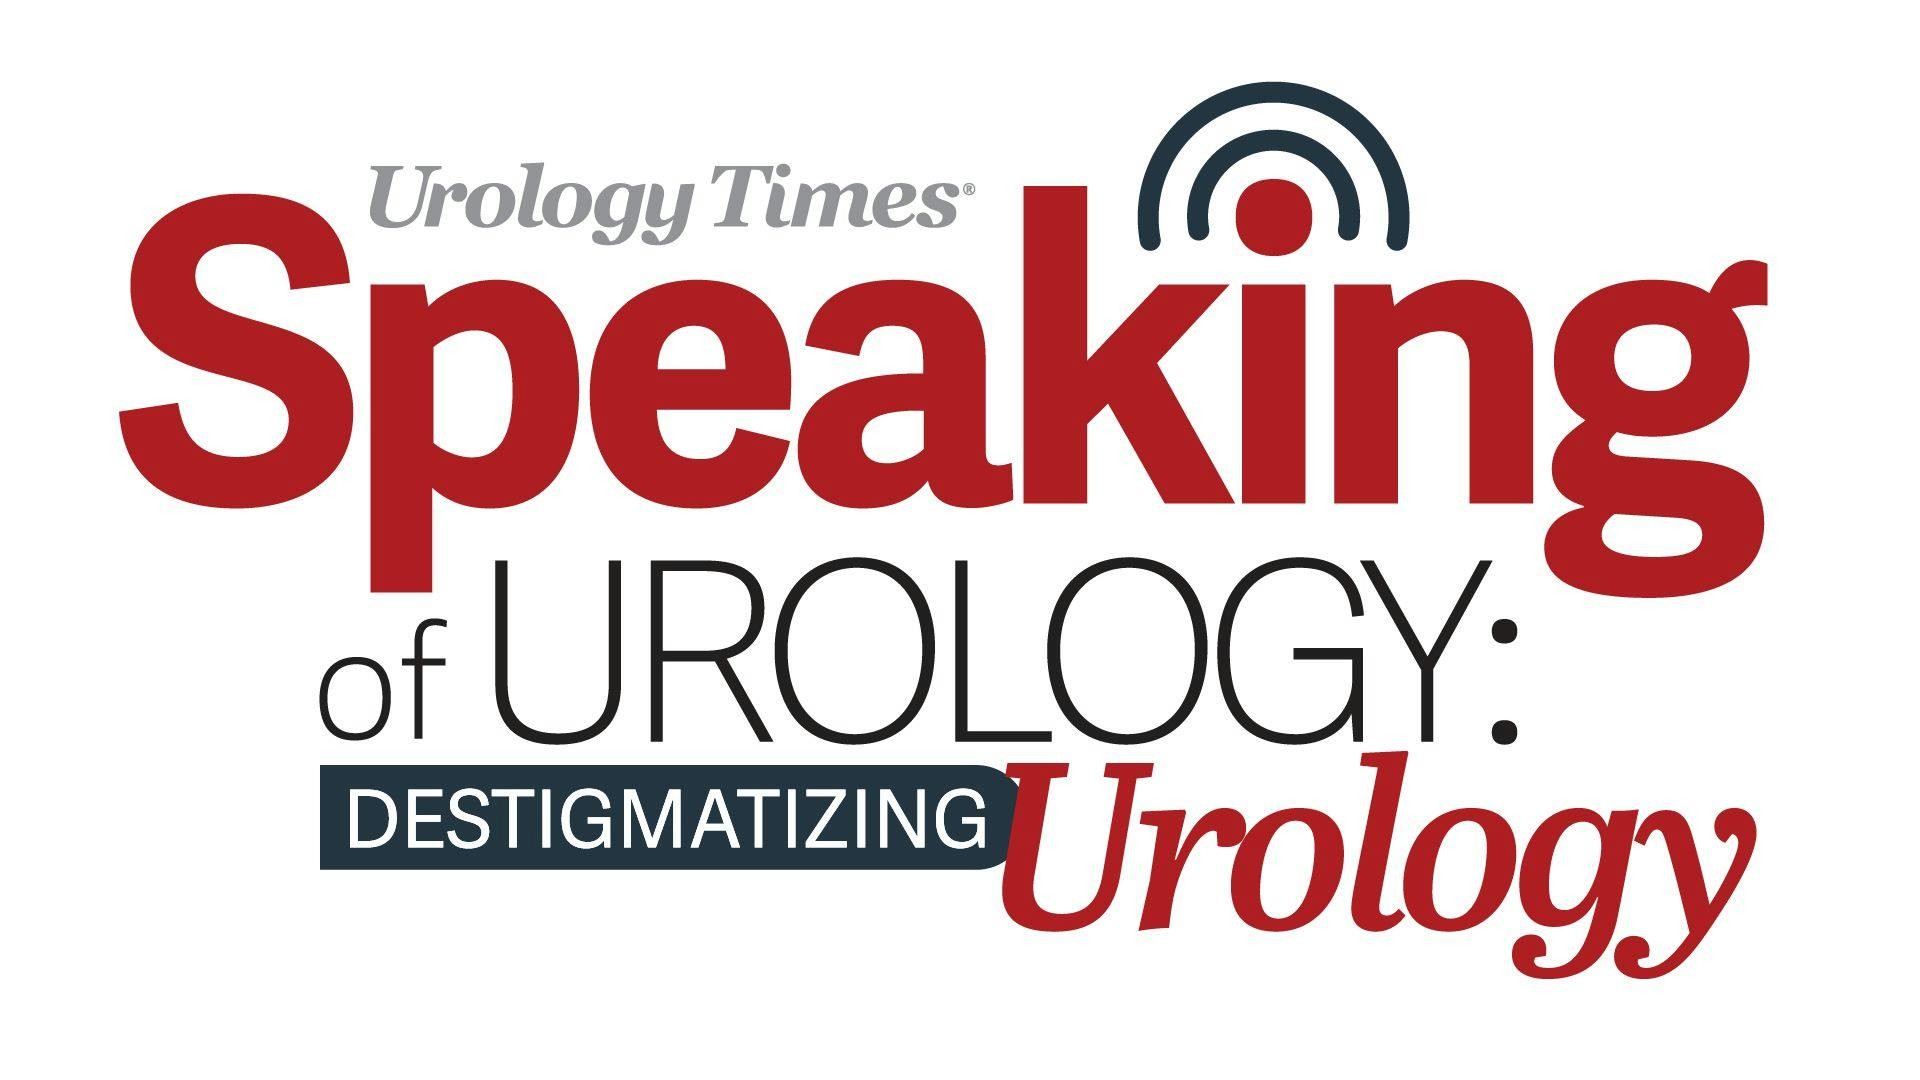 Destigmatizing Urology: Dr. Pettaway discusses penile cancer